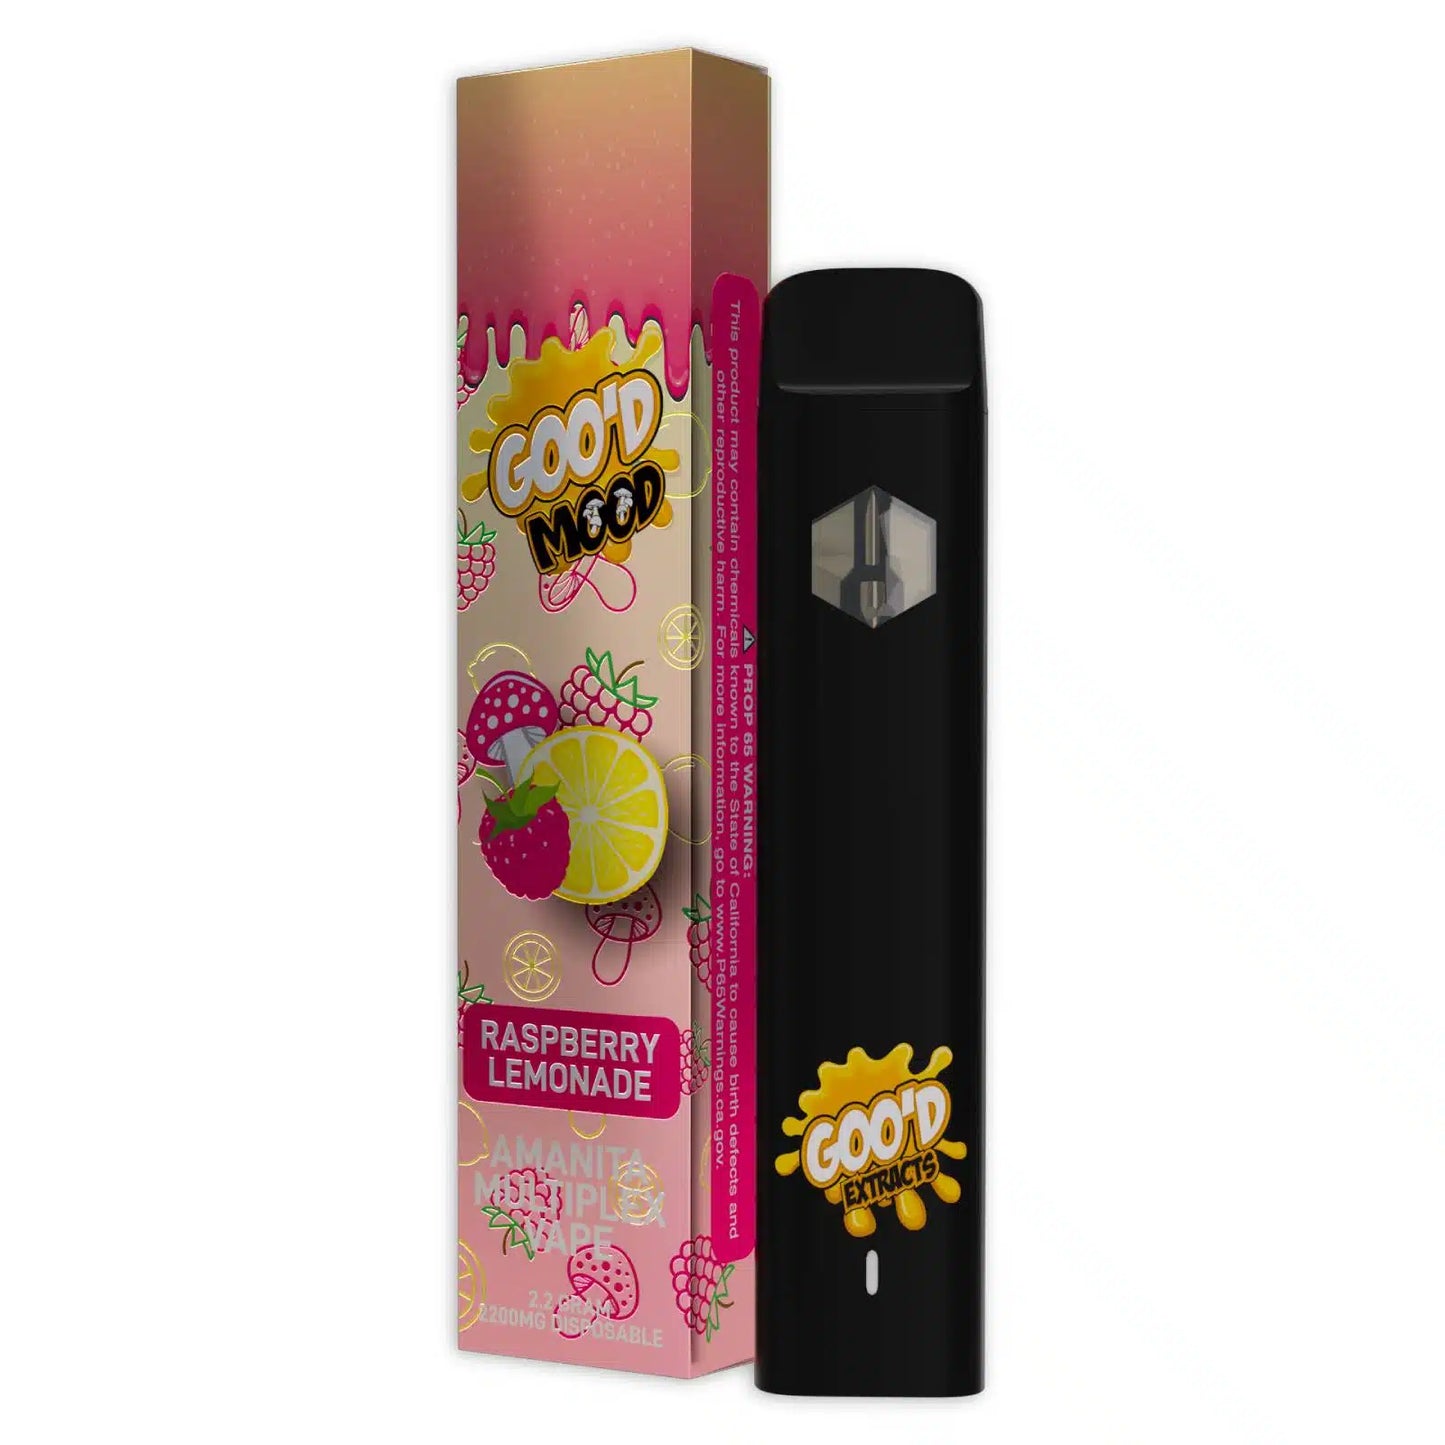 Goo’d Mood Raspberry Lemonade HHC Amanita Multiplex 2.2G